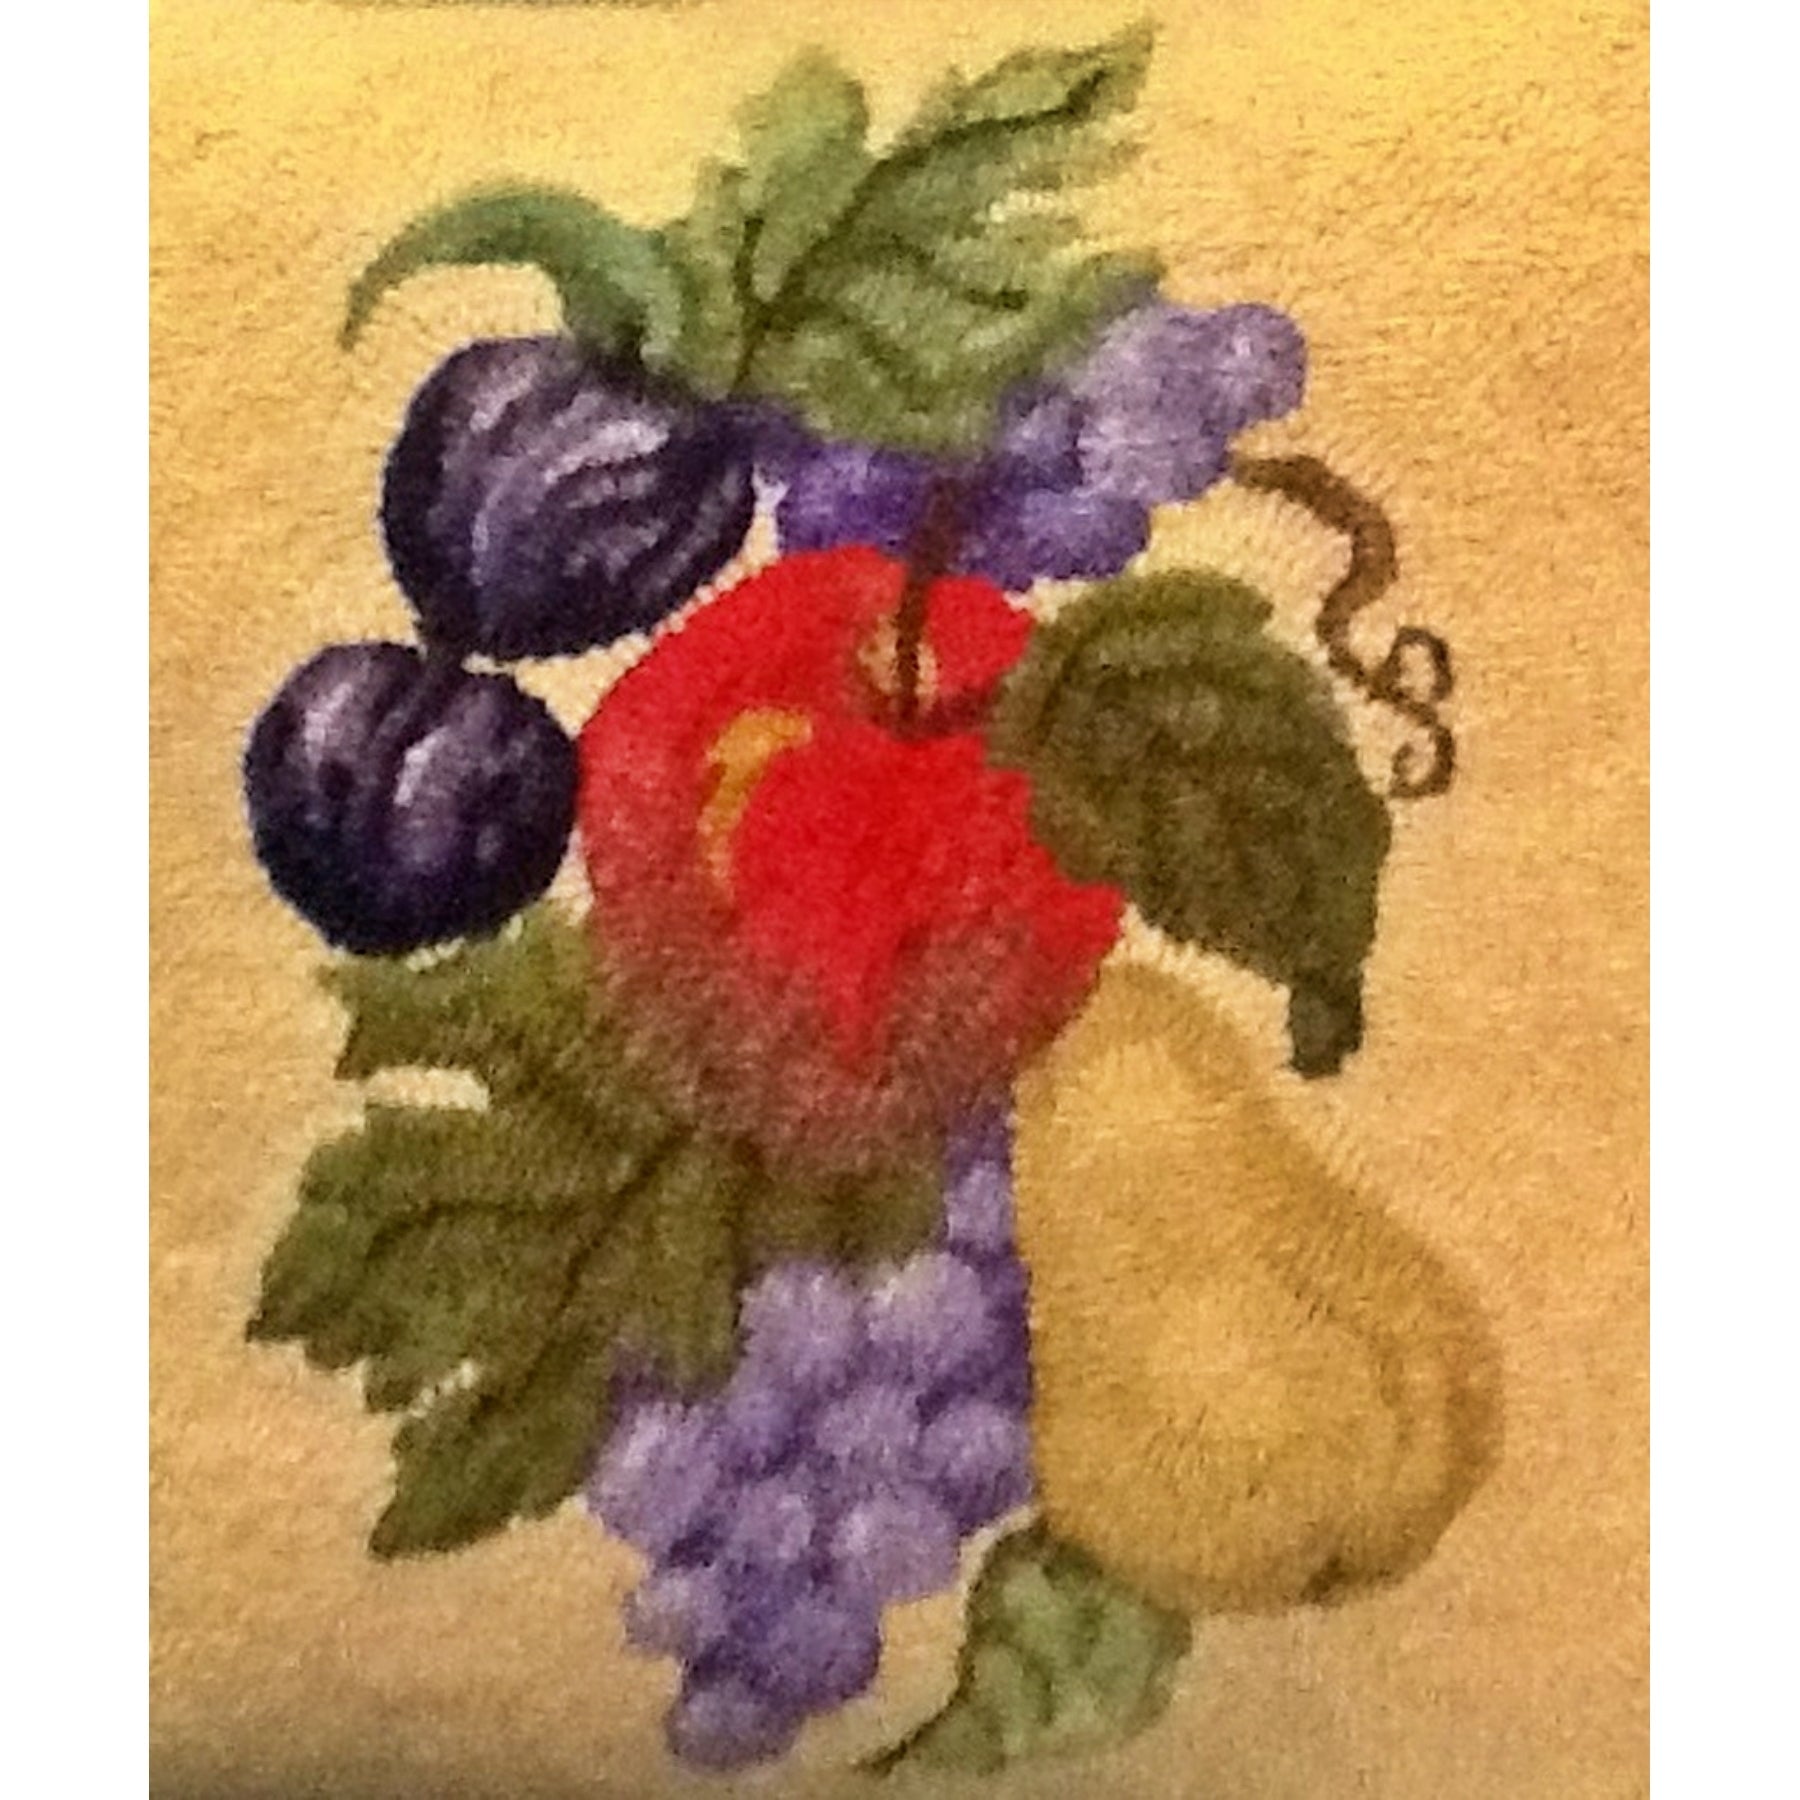 Fruit, rug hooked by Antoinette Uffner